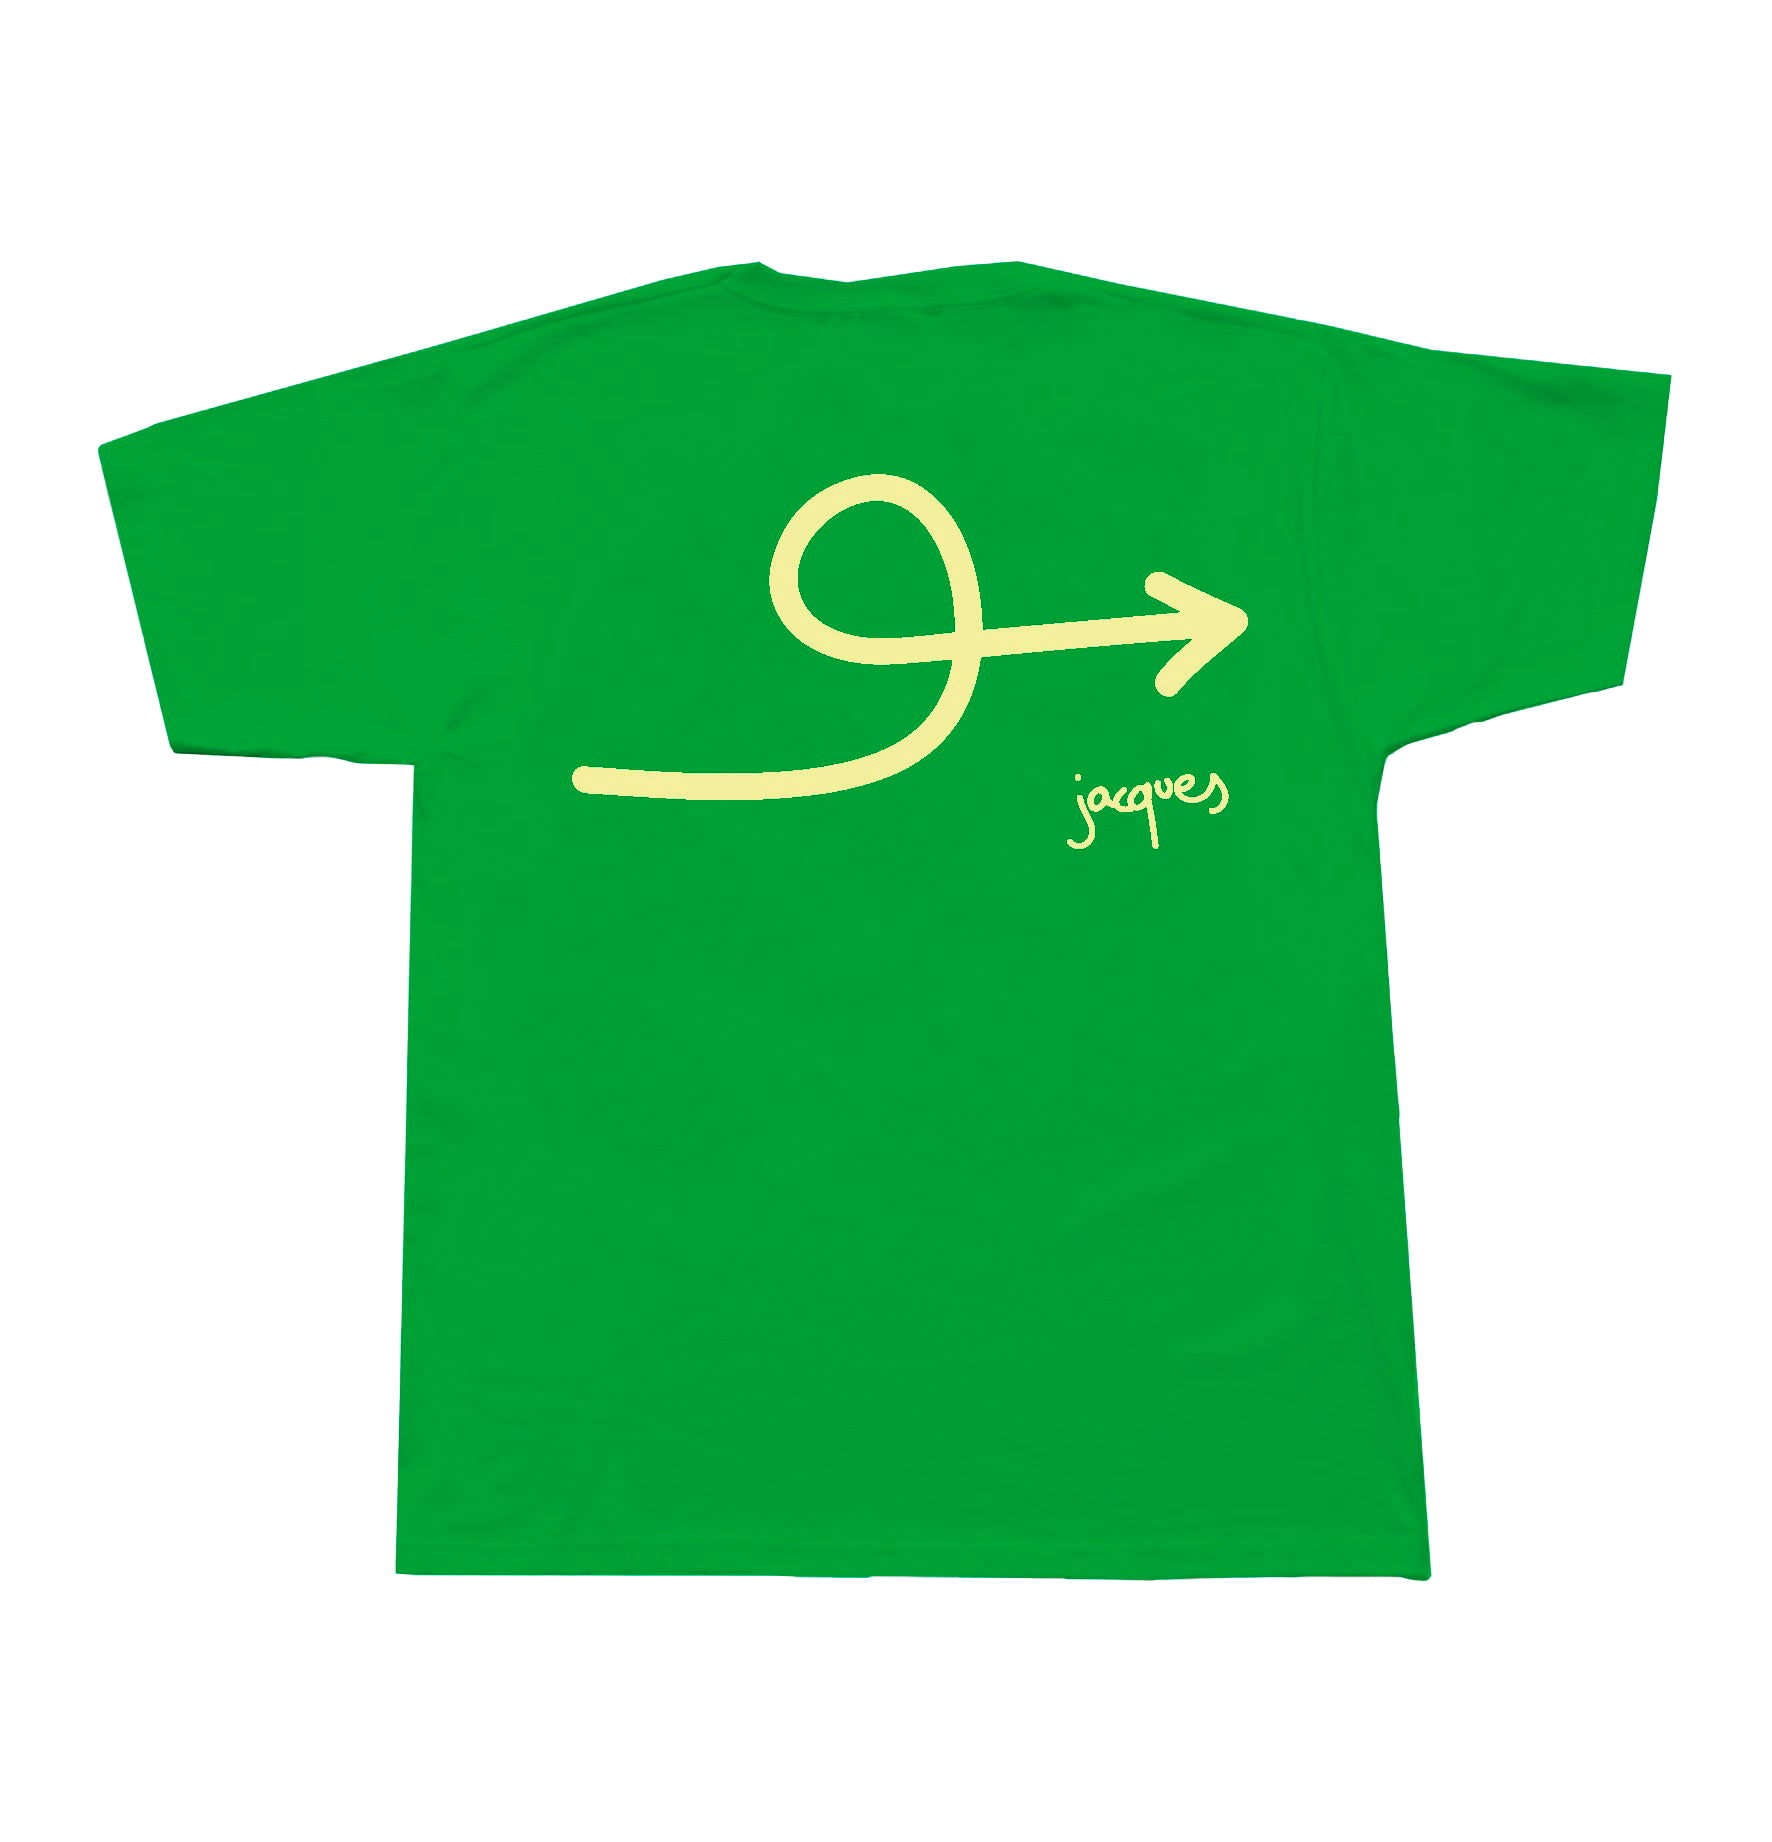 T-shirt Looping green